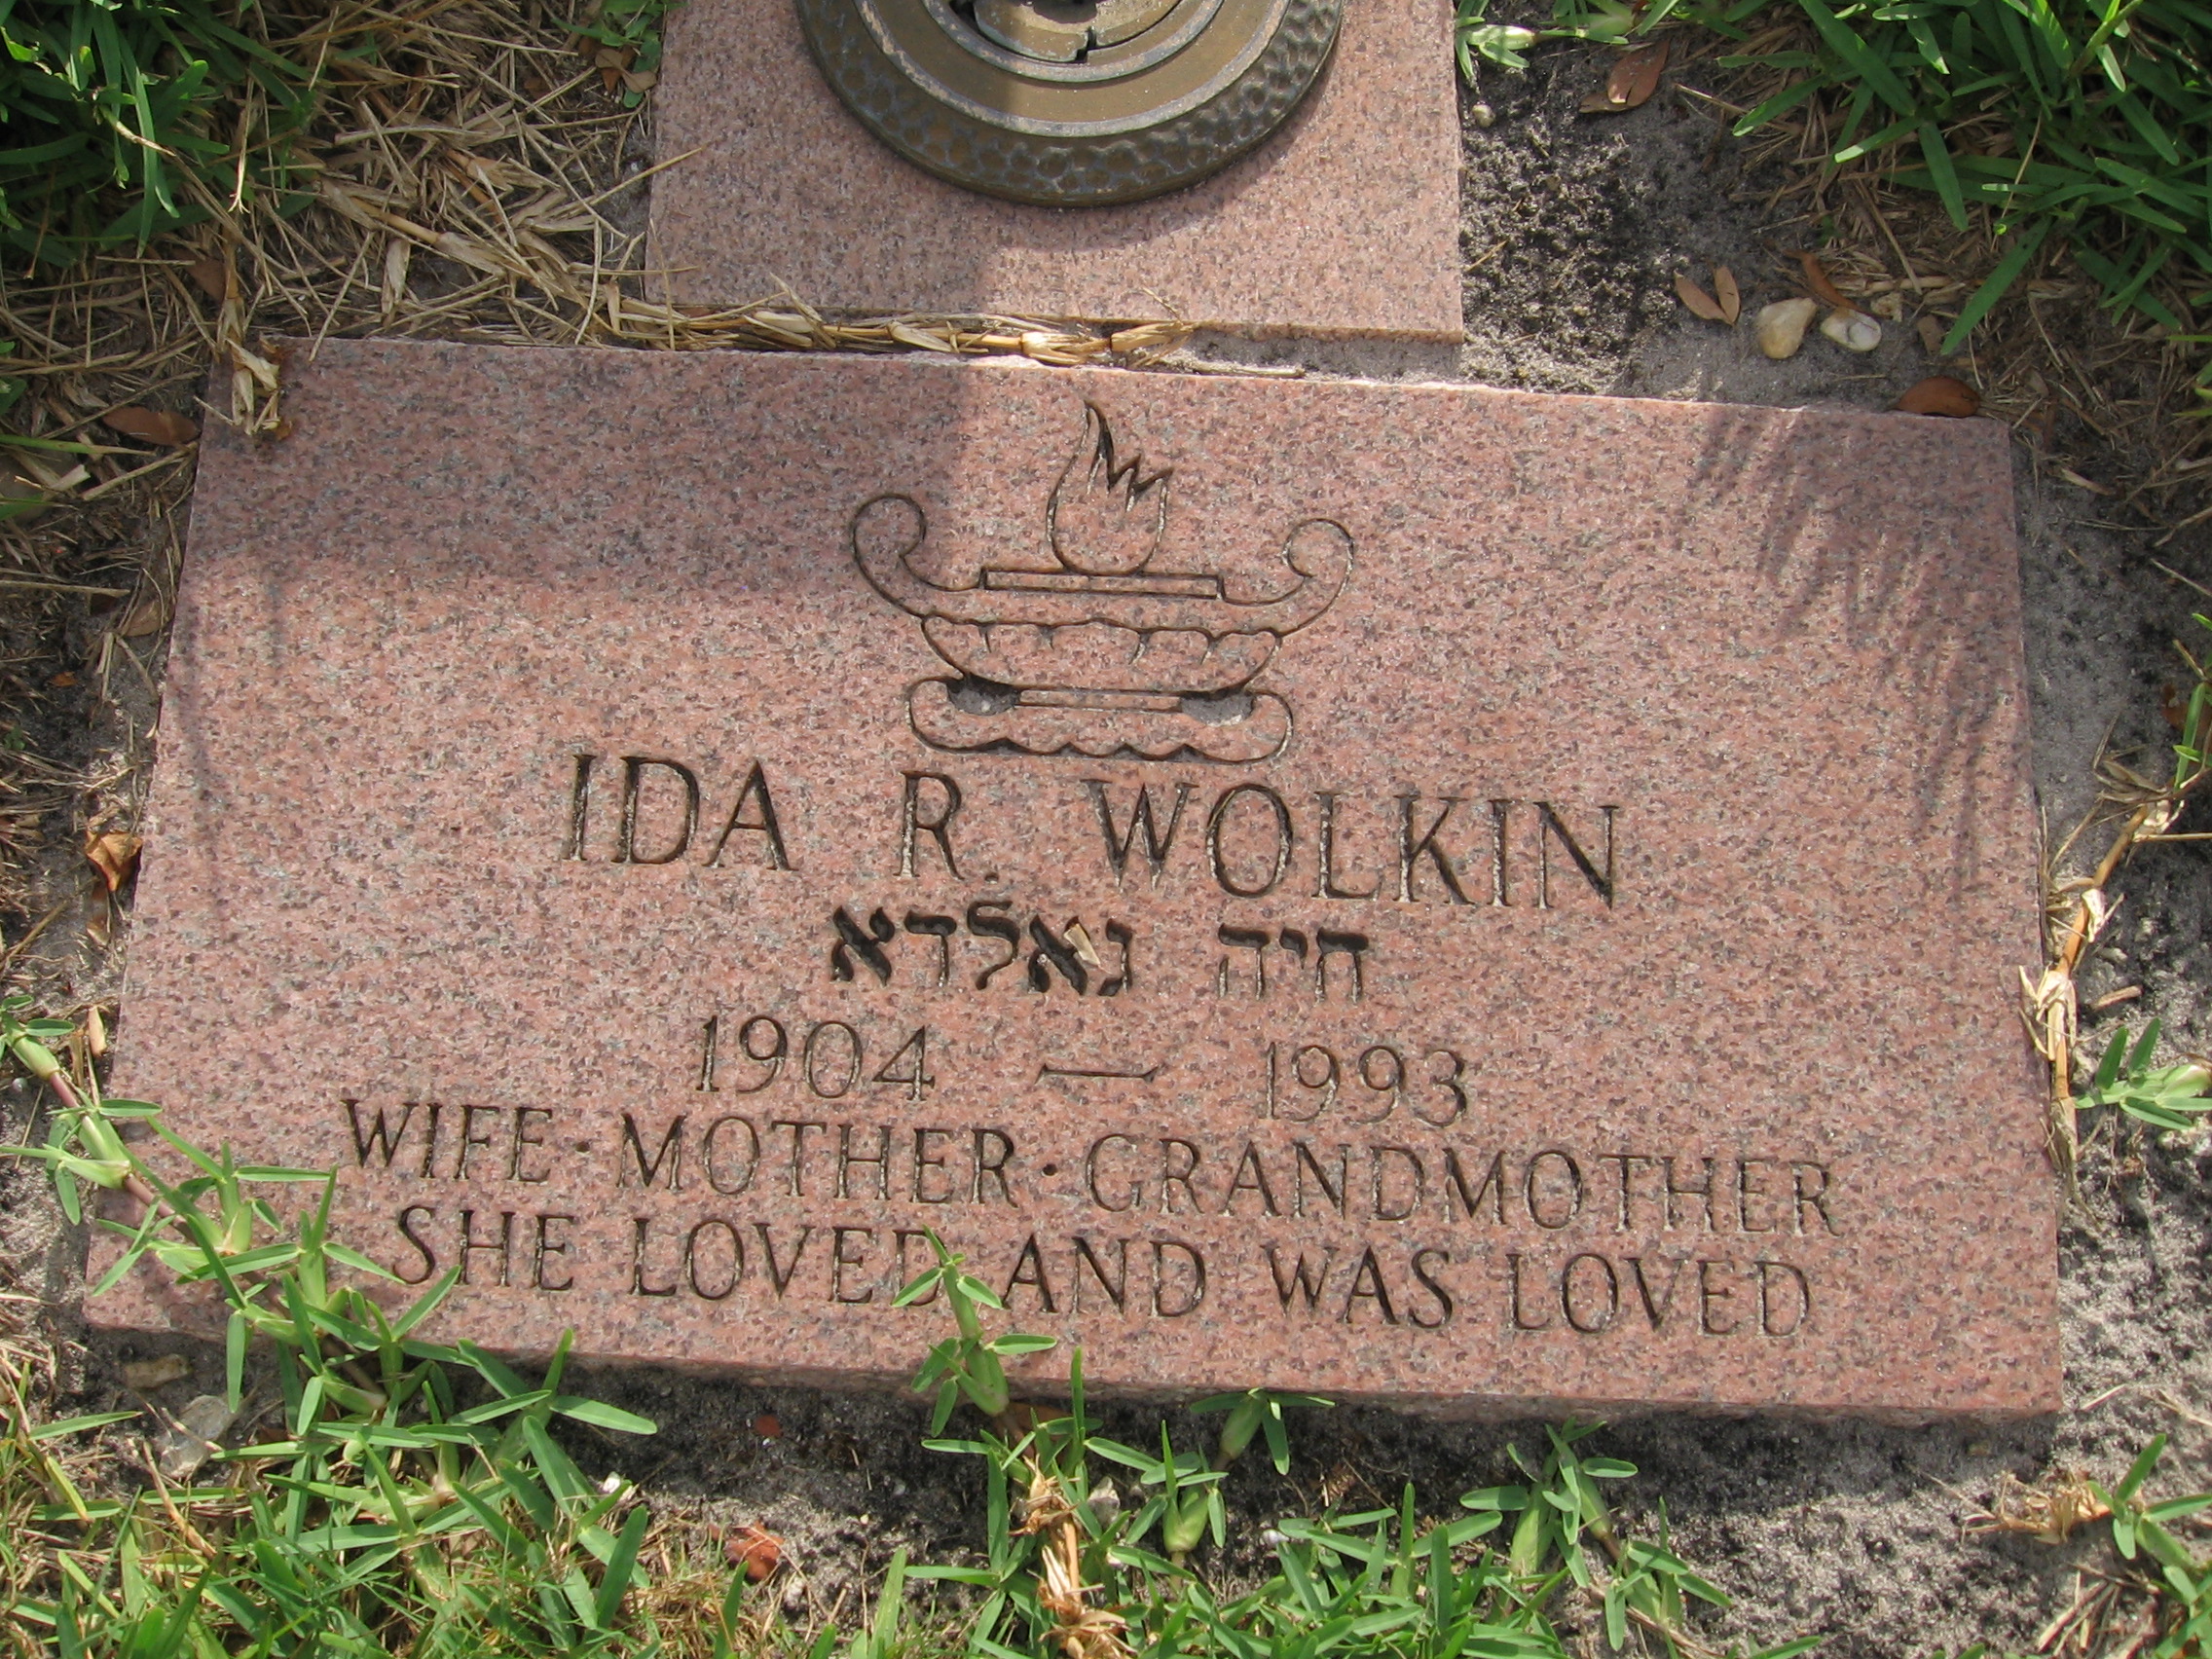 Ida R Wolkin